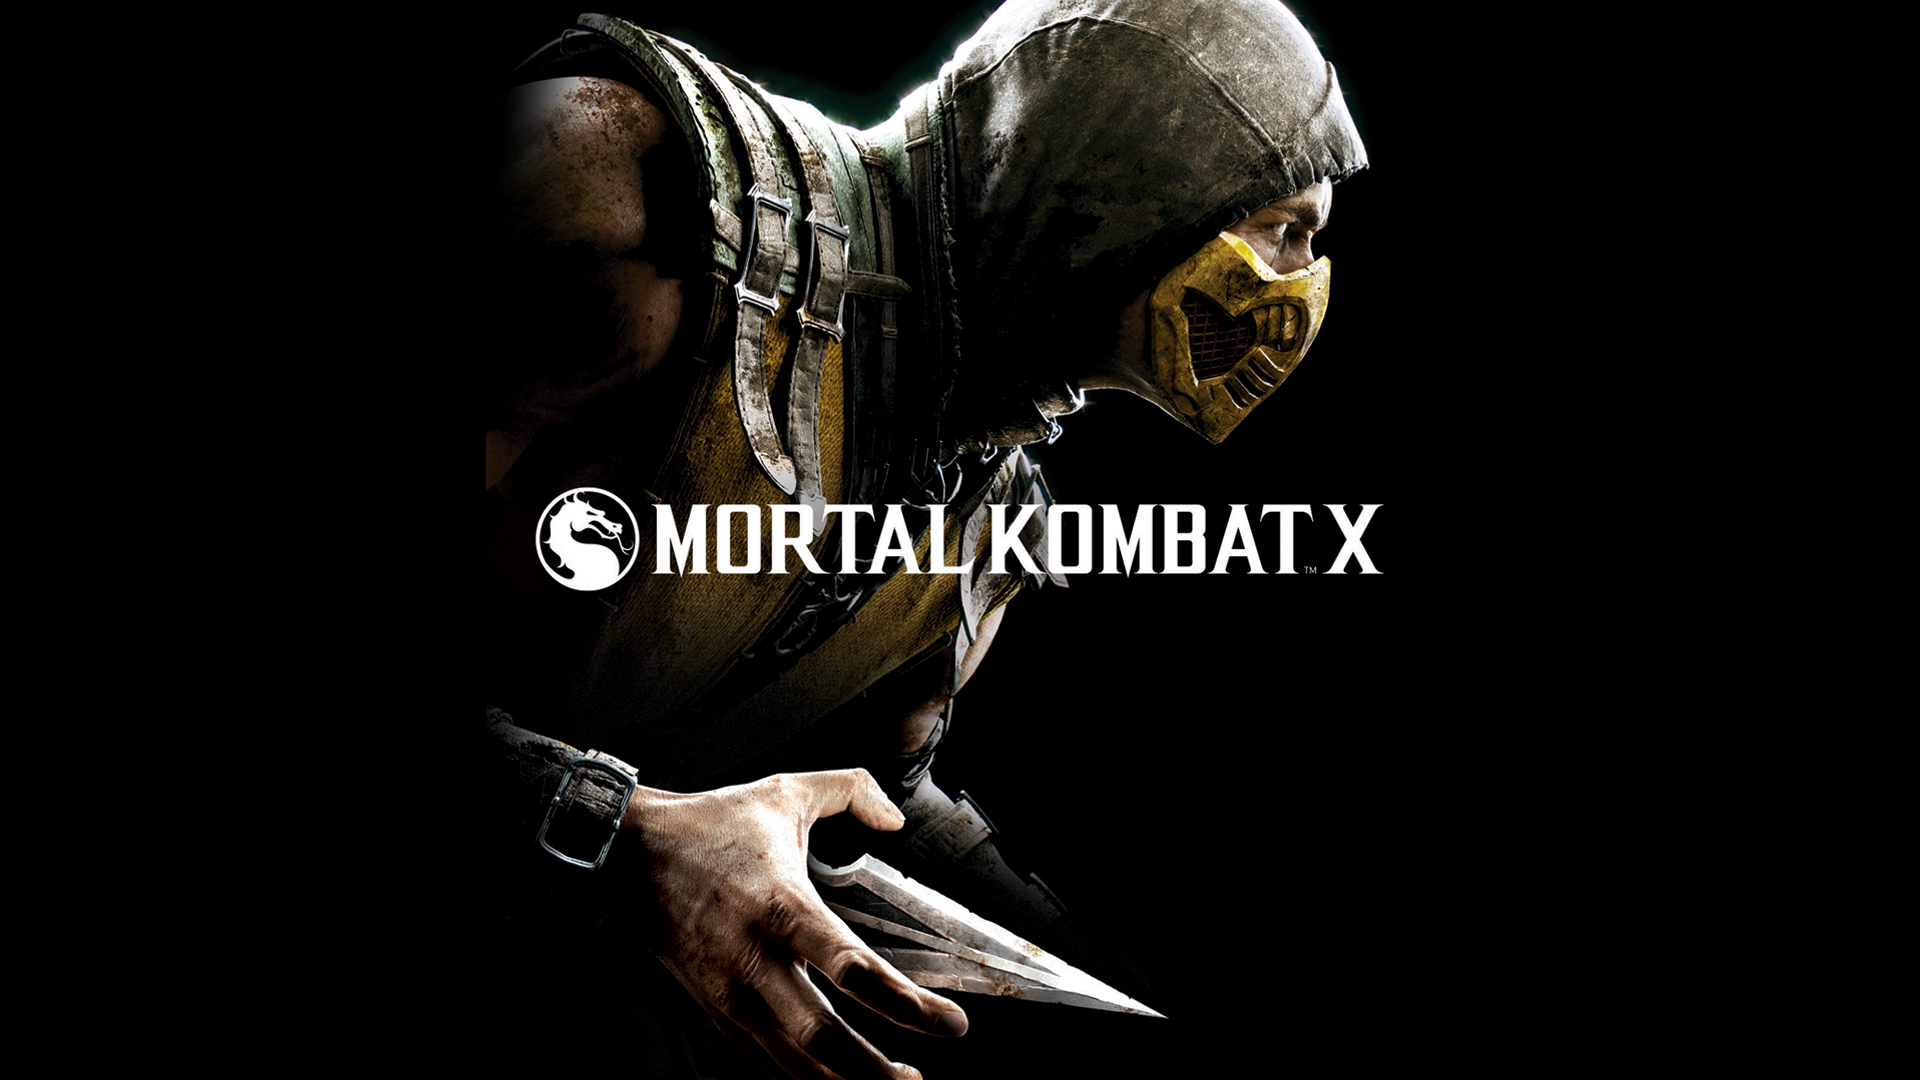 Mortal Kombat X Wallpaper HD - WallpaperSafari